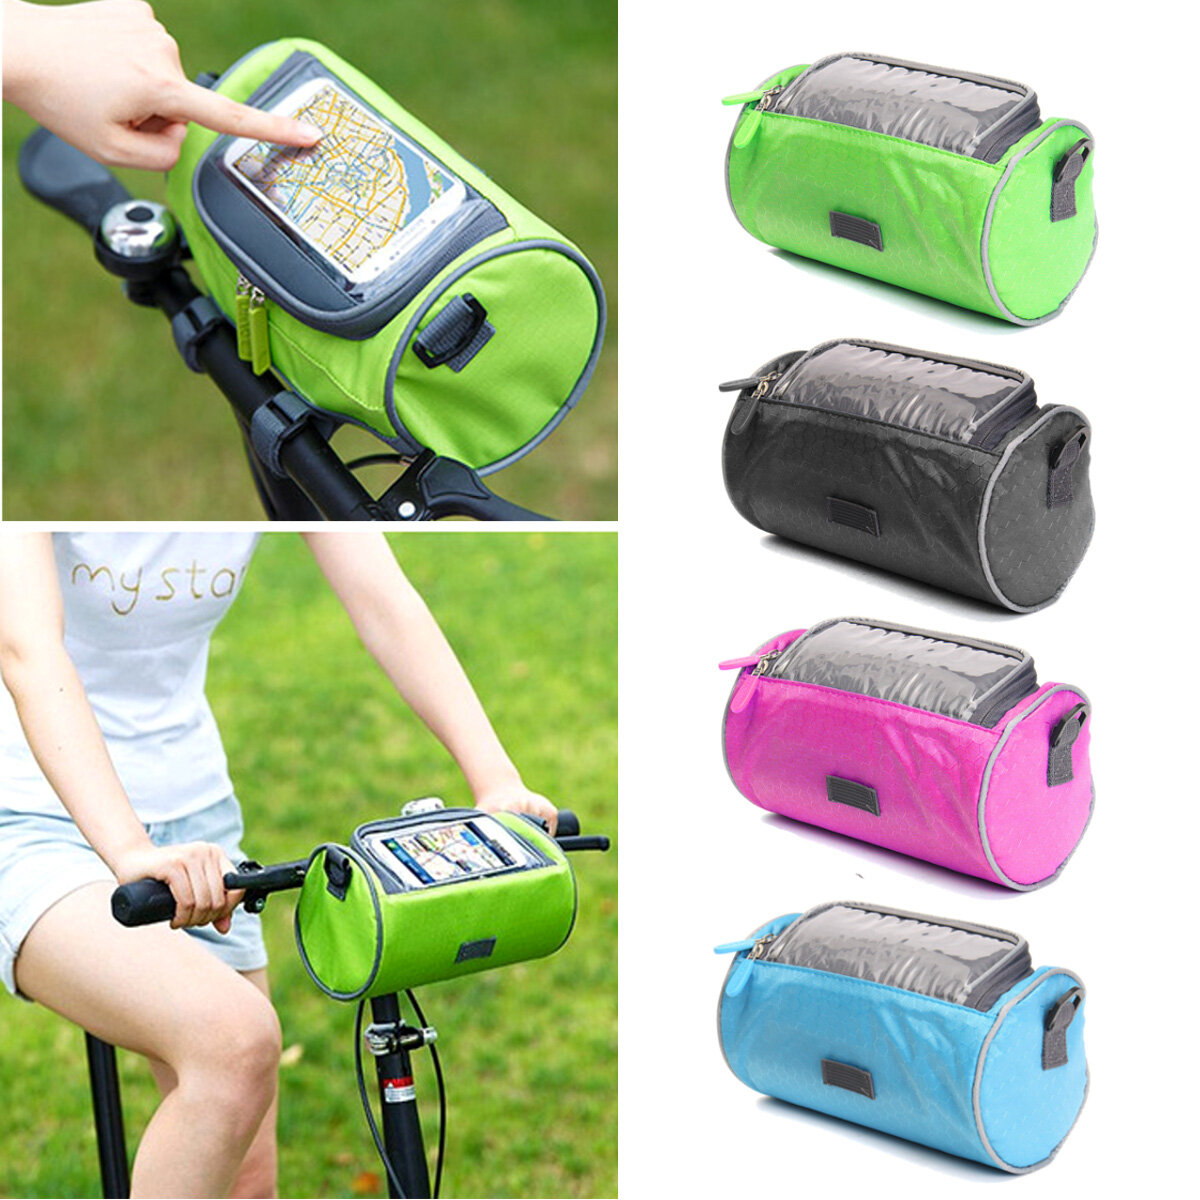 Bikight 22cmx12cmx12cm Waterproof Screen Touchable Cycling Pannier Tube Gps Cell Mobile Phone Bags Bike Frame Bag For Mountain Bicycle Sale Banggood Com